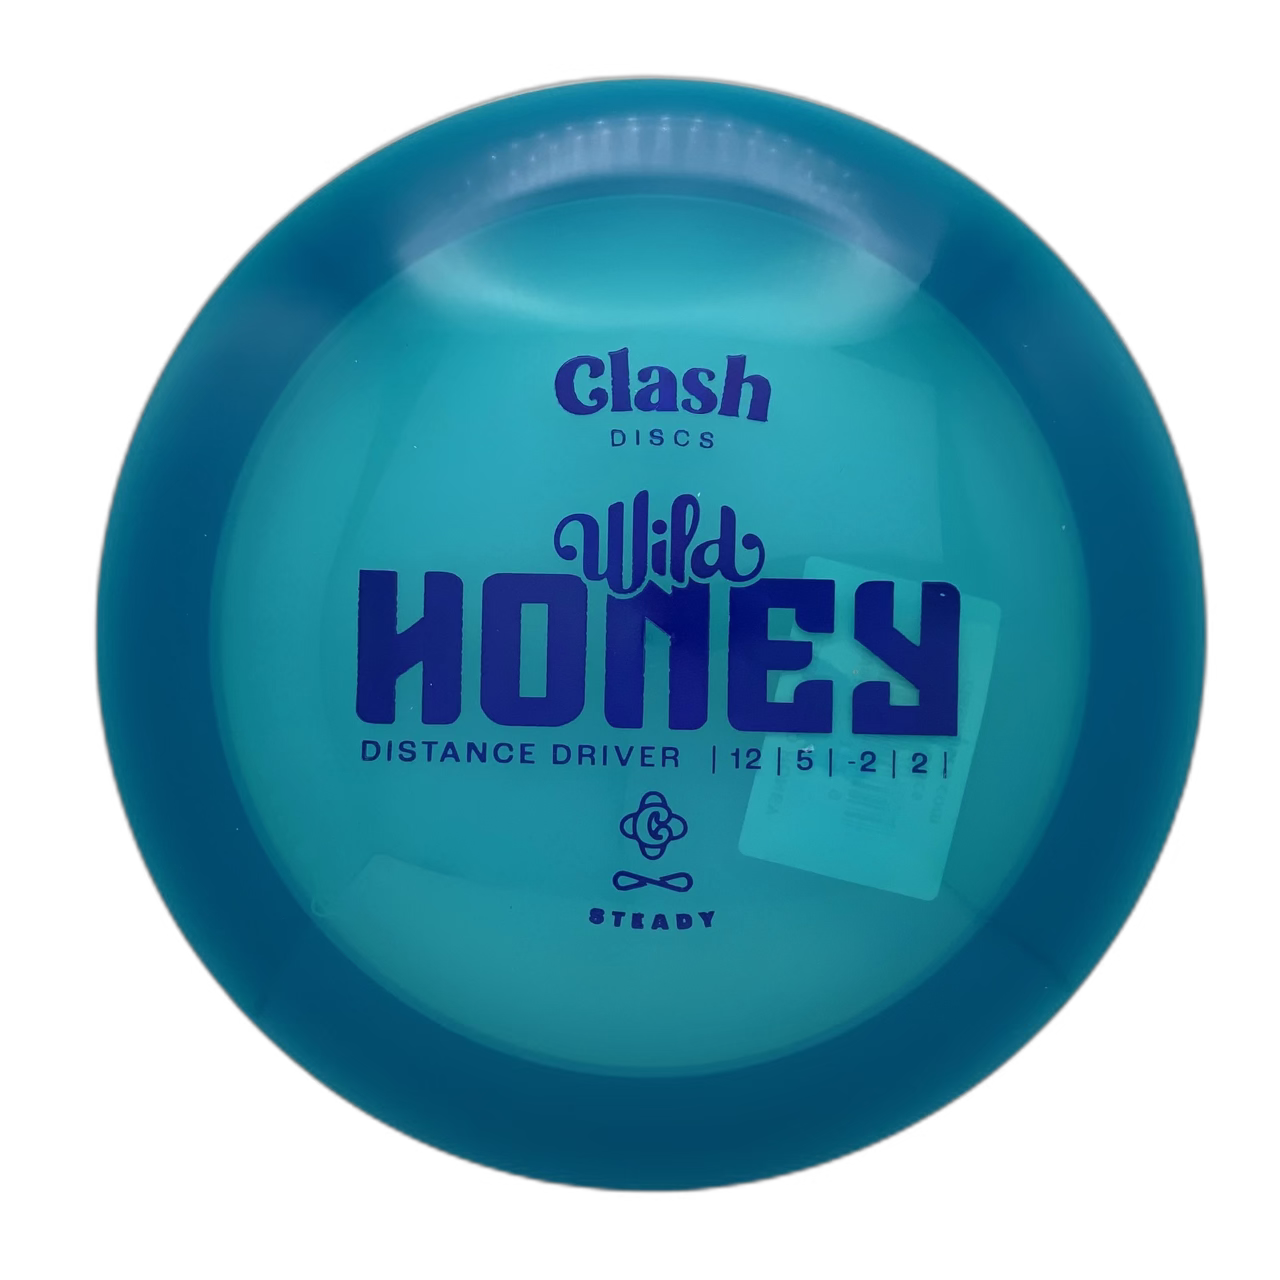 Clash Wild Honey - Astro Discs TX - Houston Disc Golf